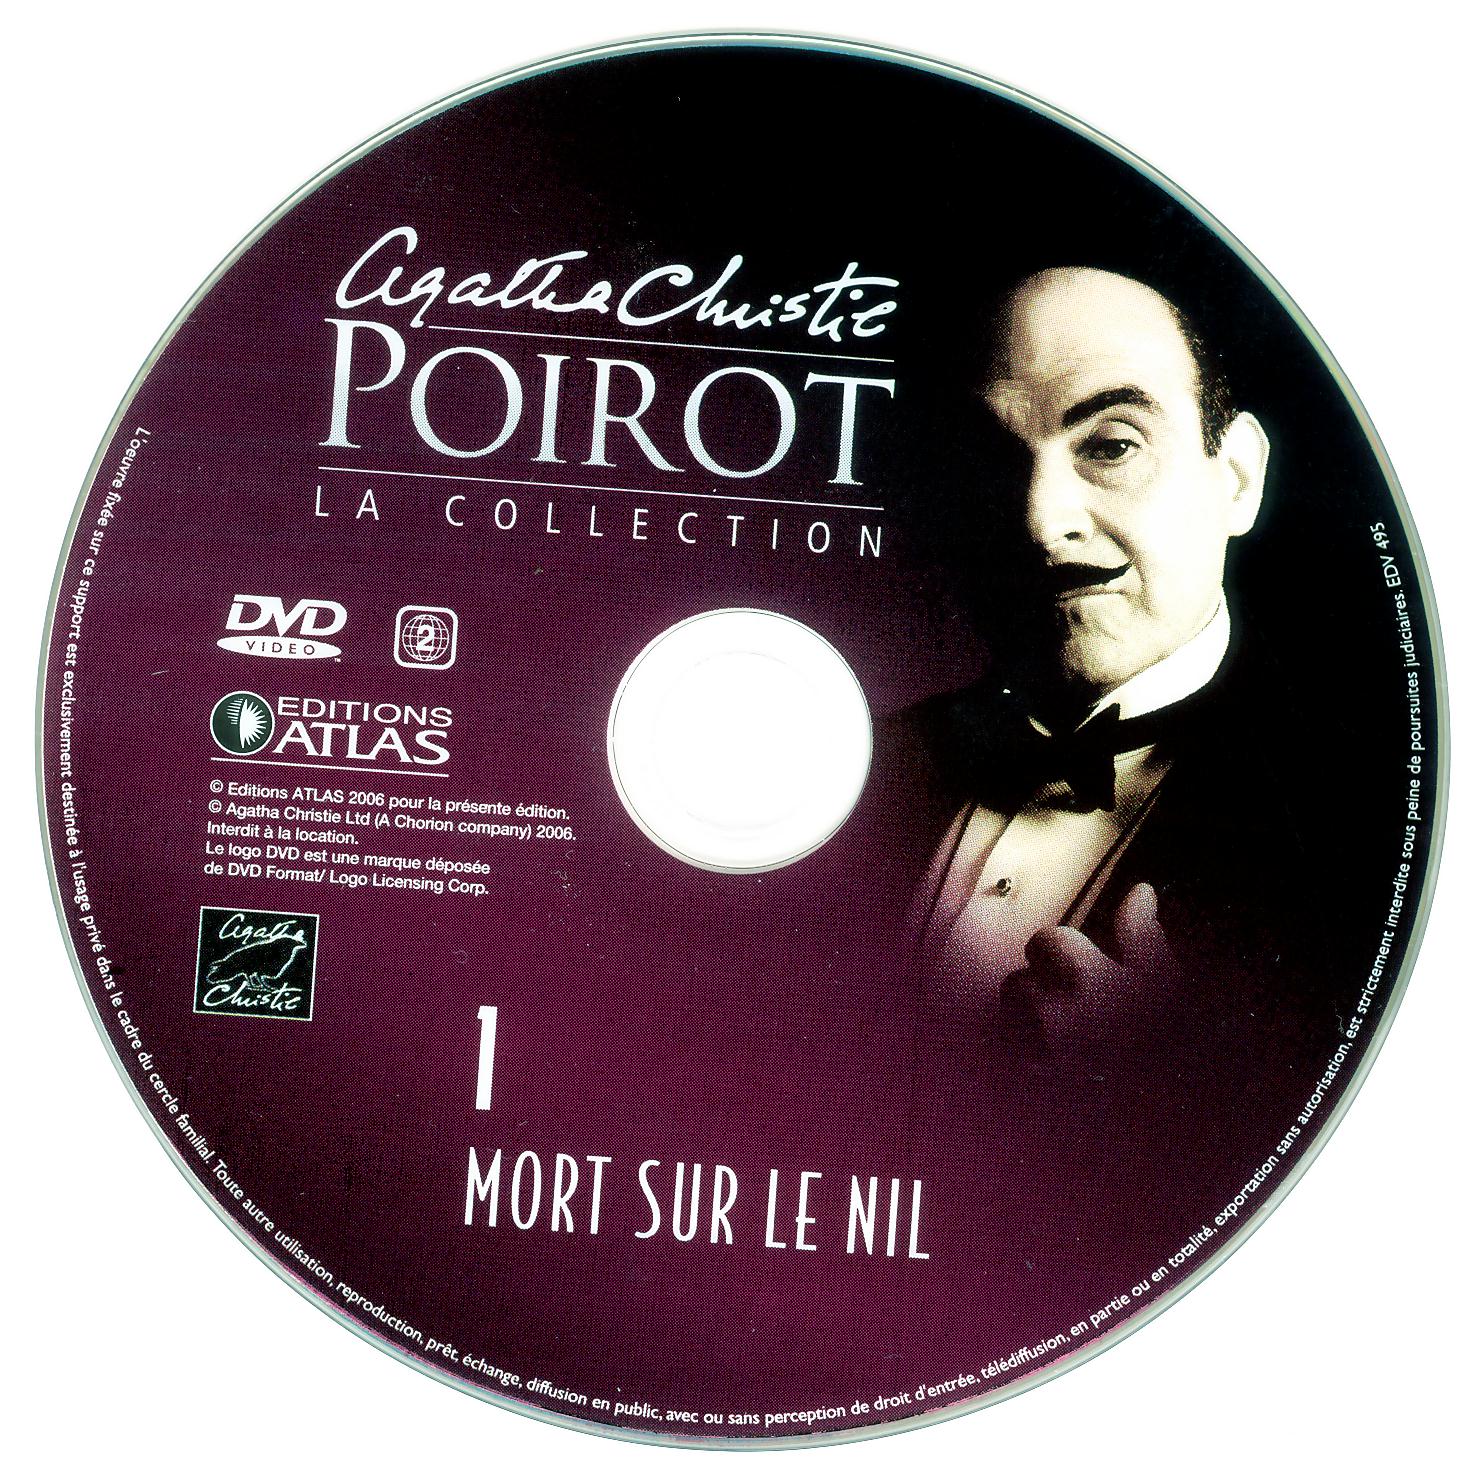 Hercule Poirot vol 1